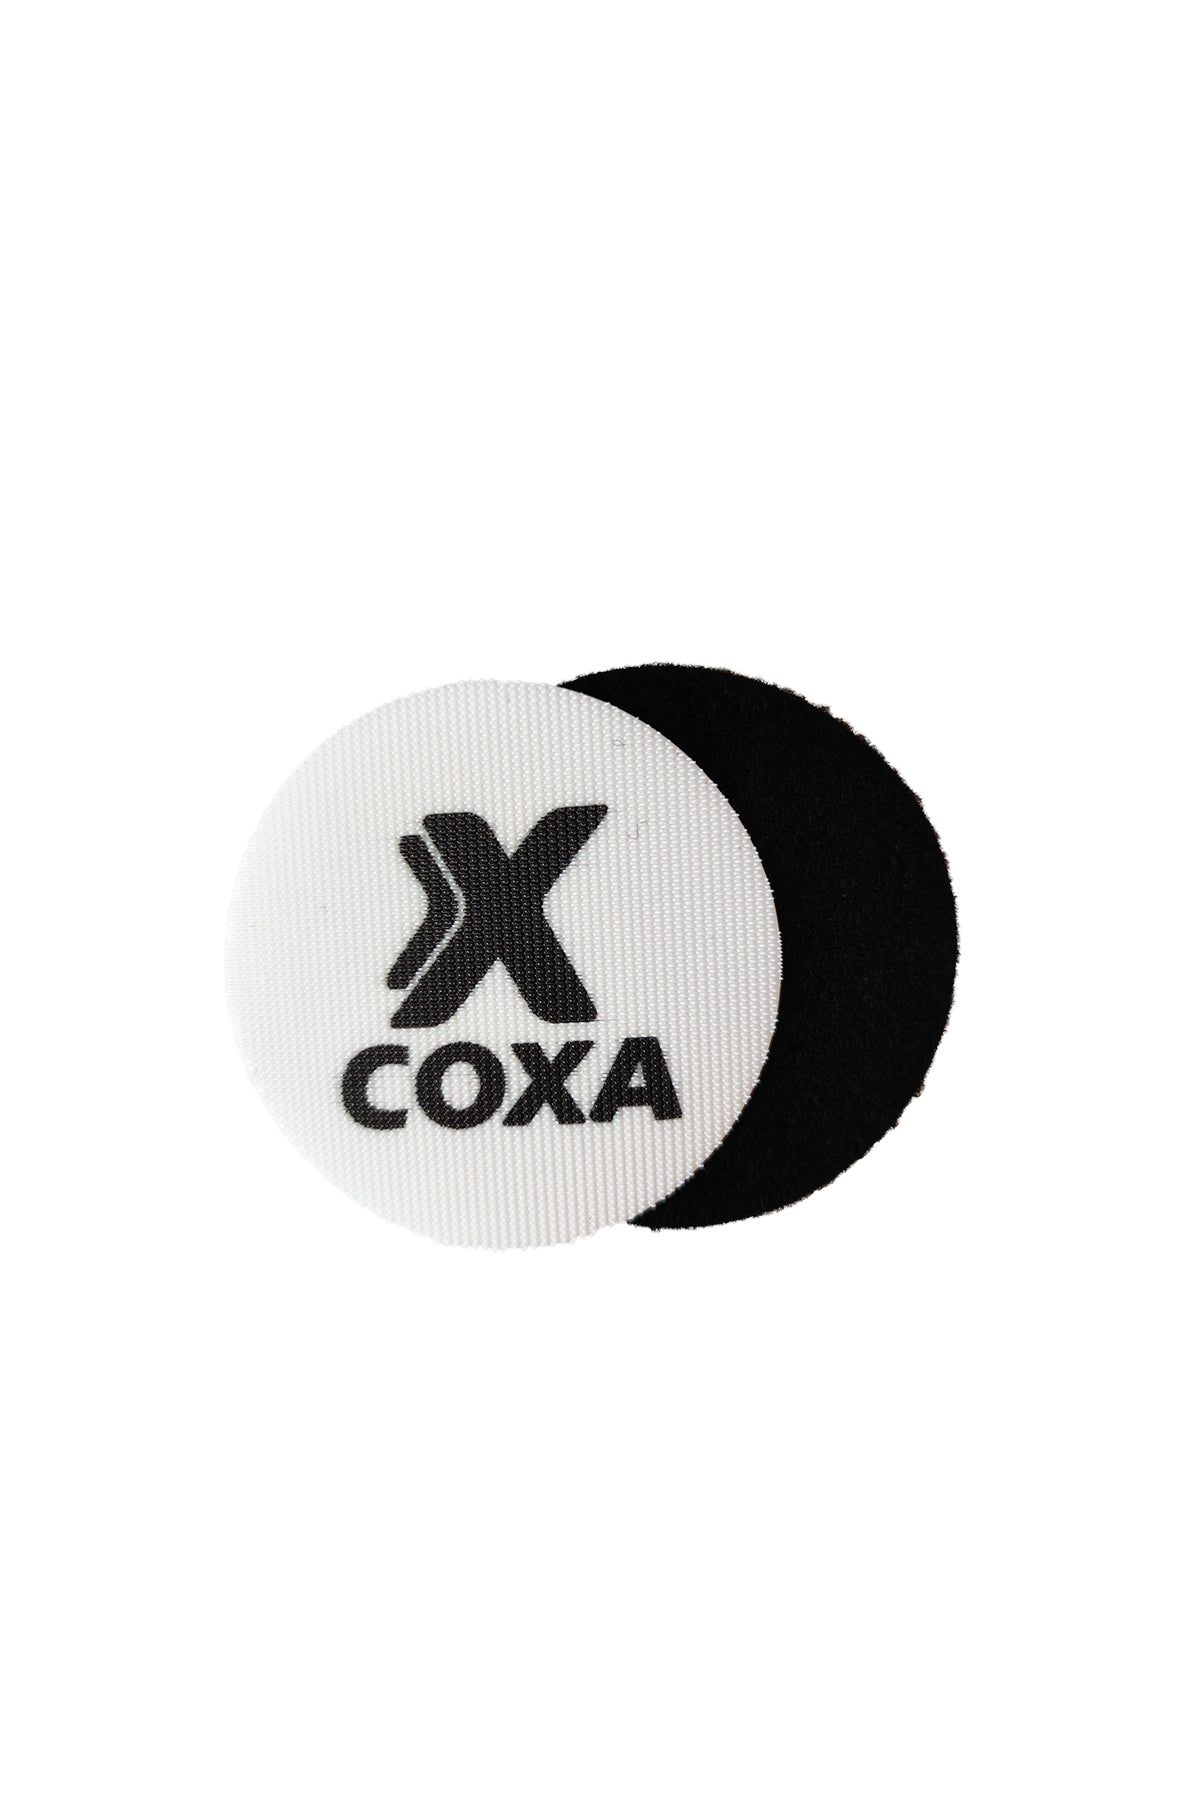 COXACarry Velcro Patches x 4